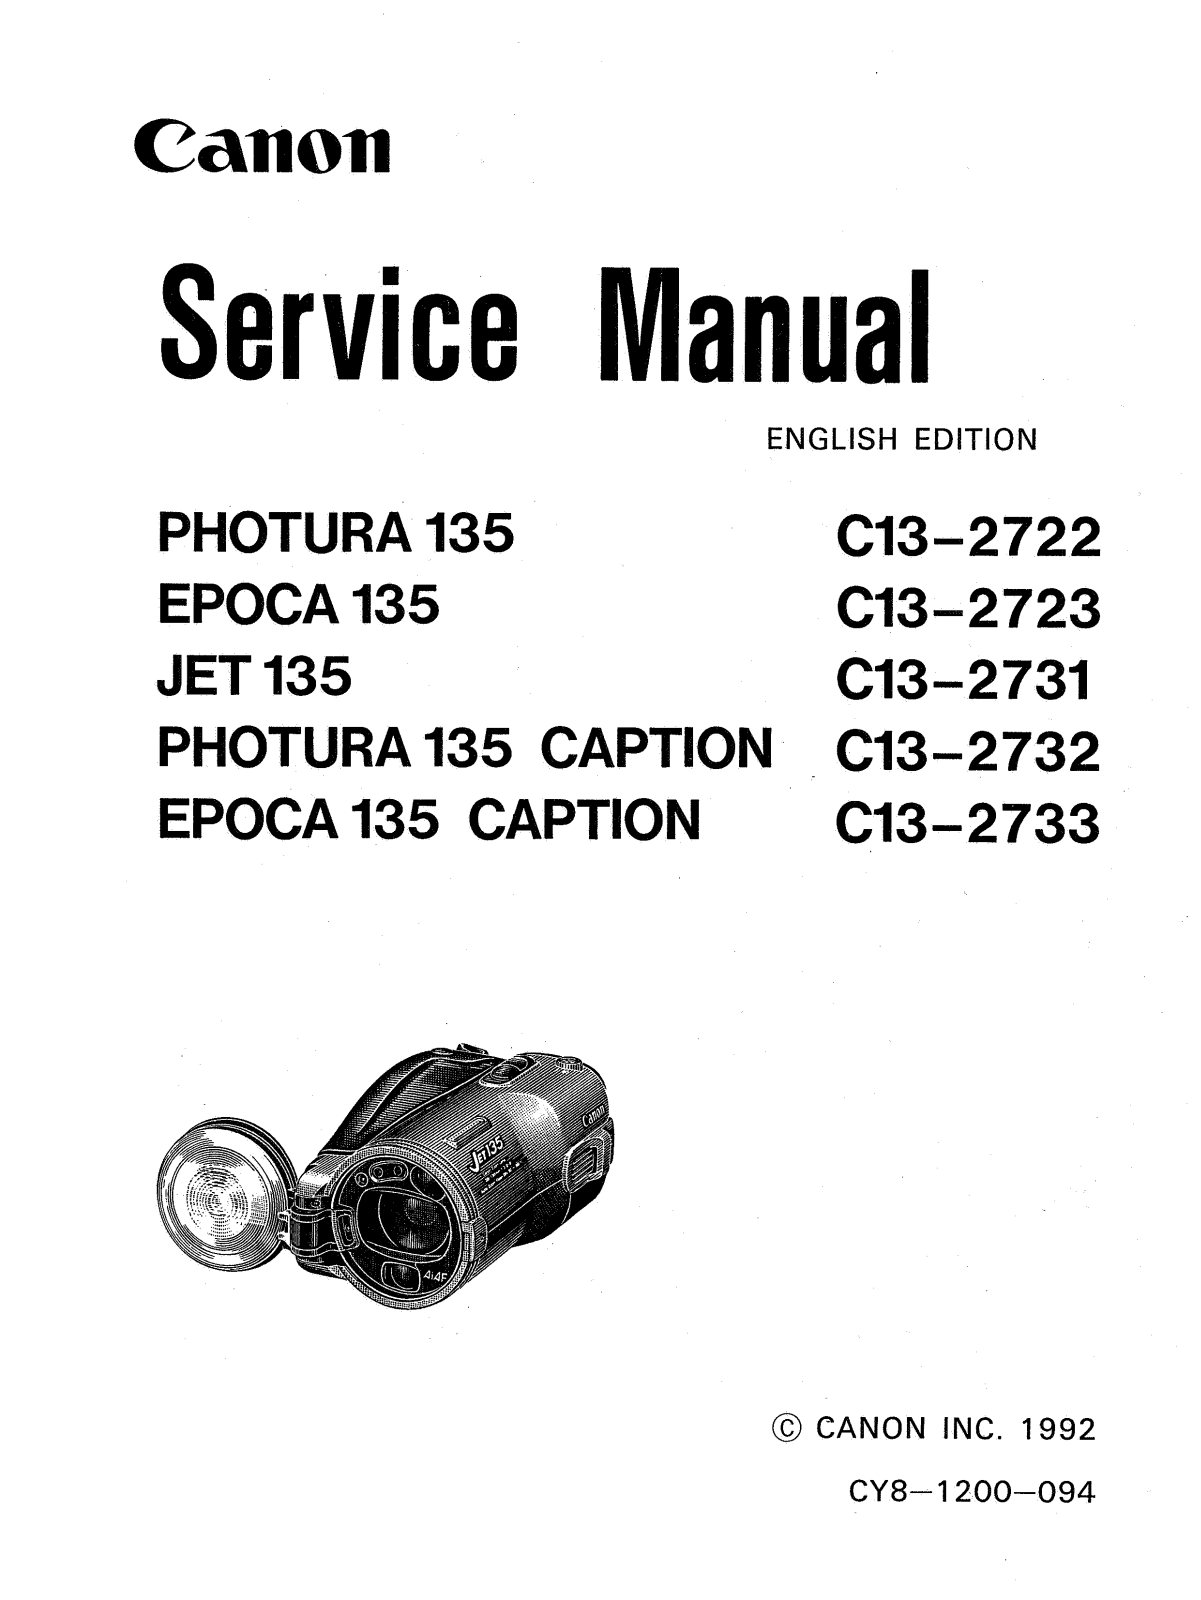 CANON photura 135, Epoca 135, Jet 135 Service Manual